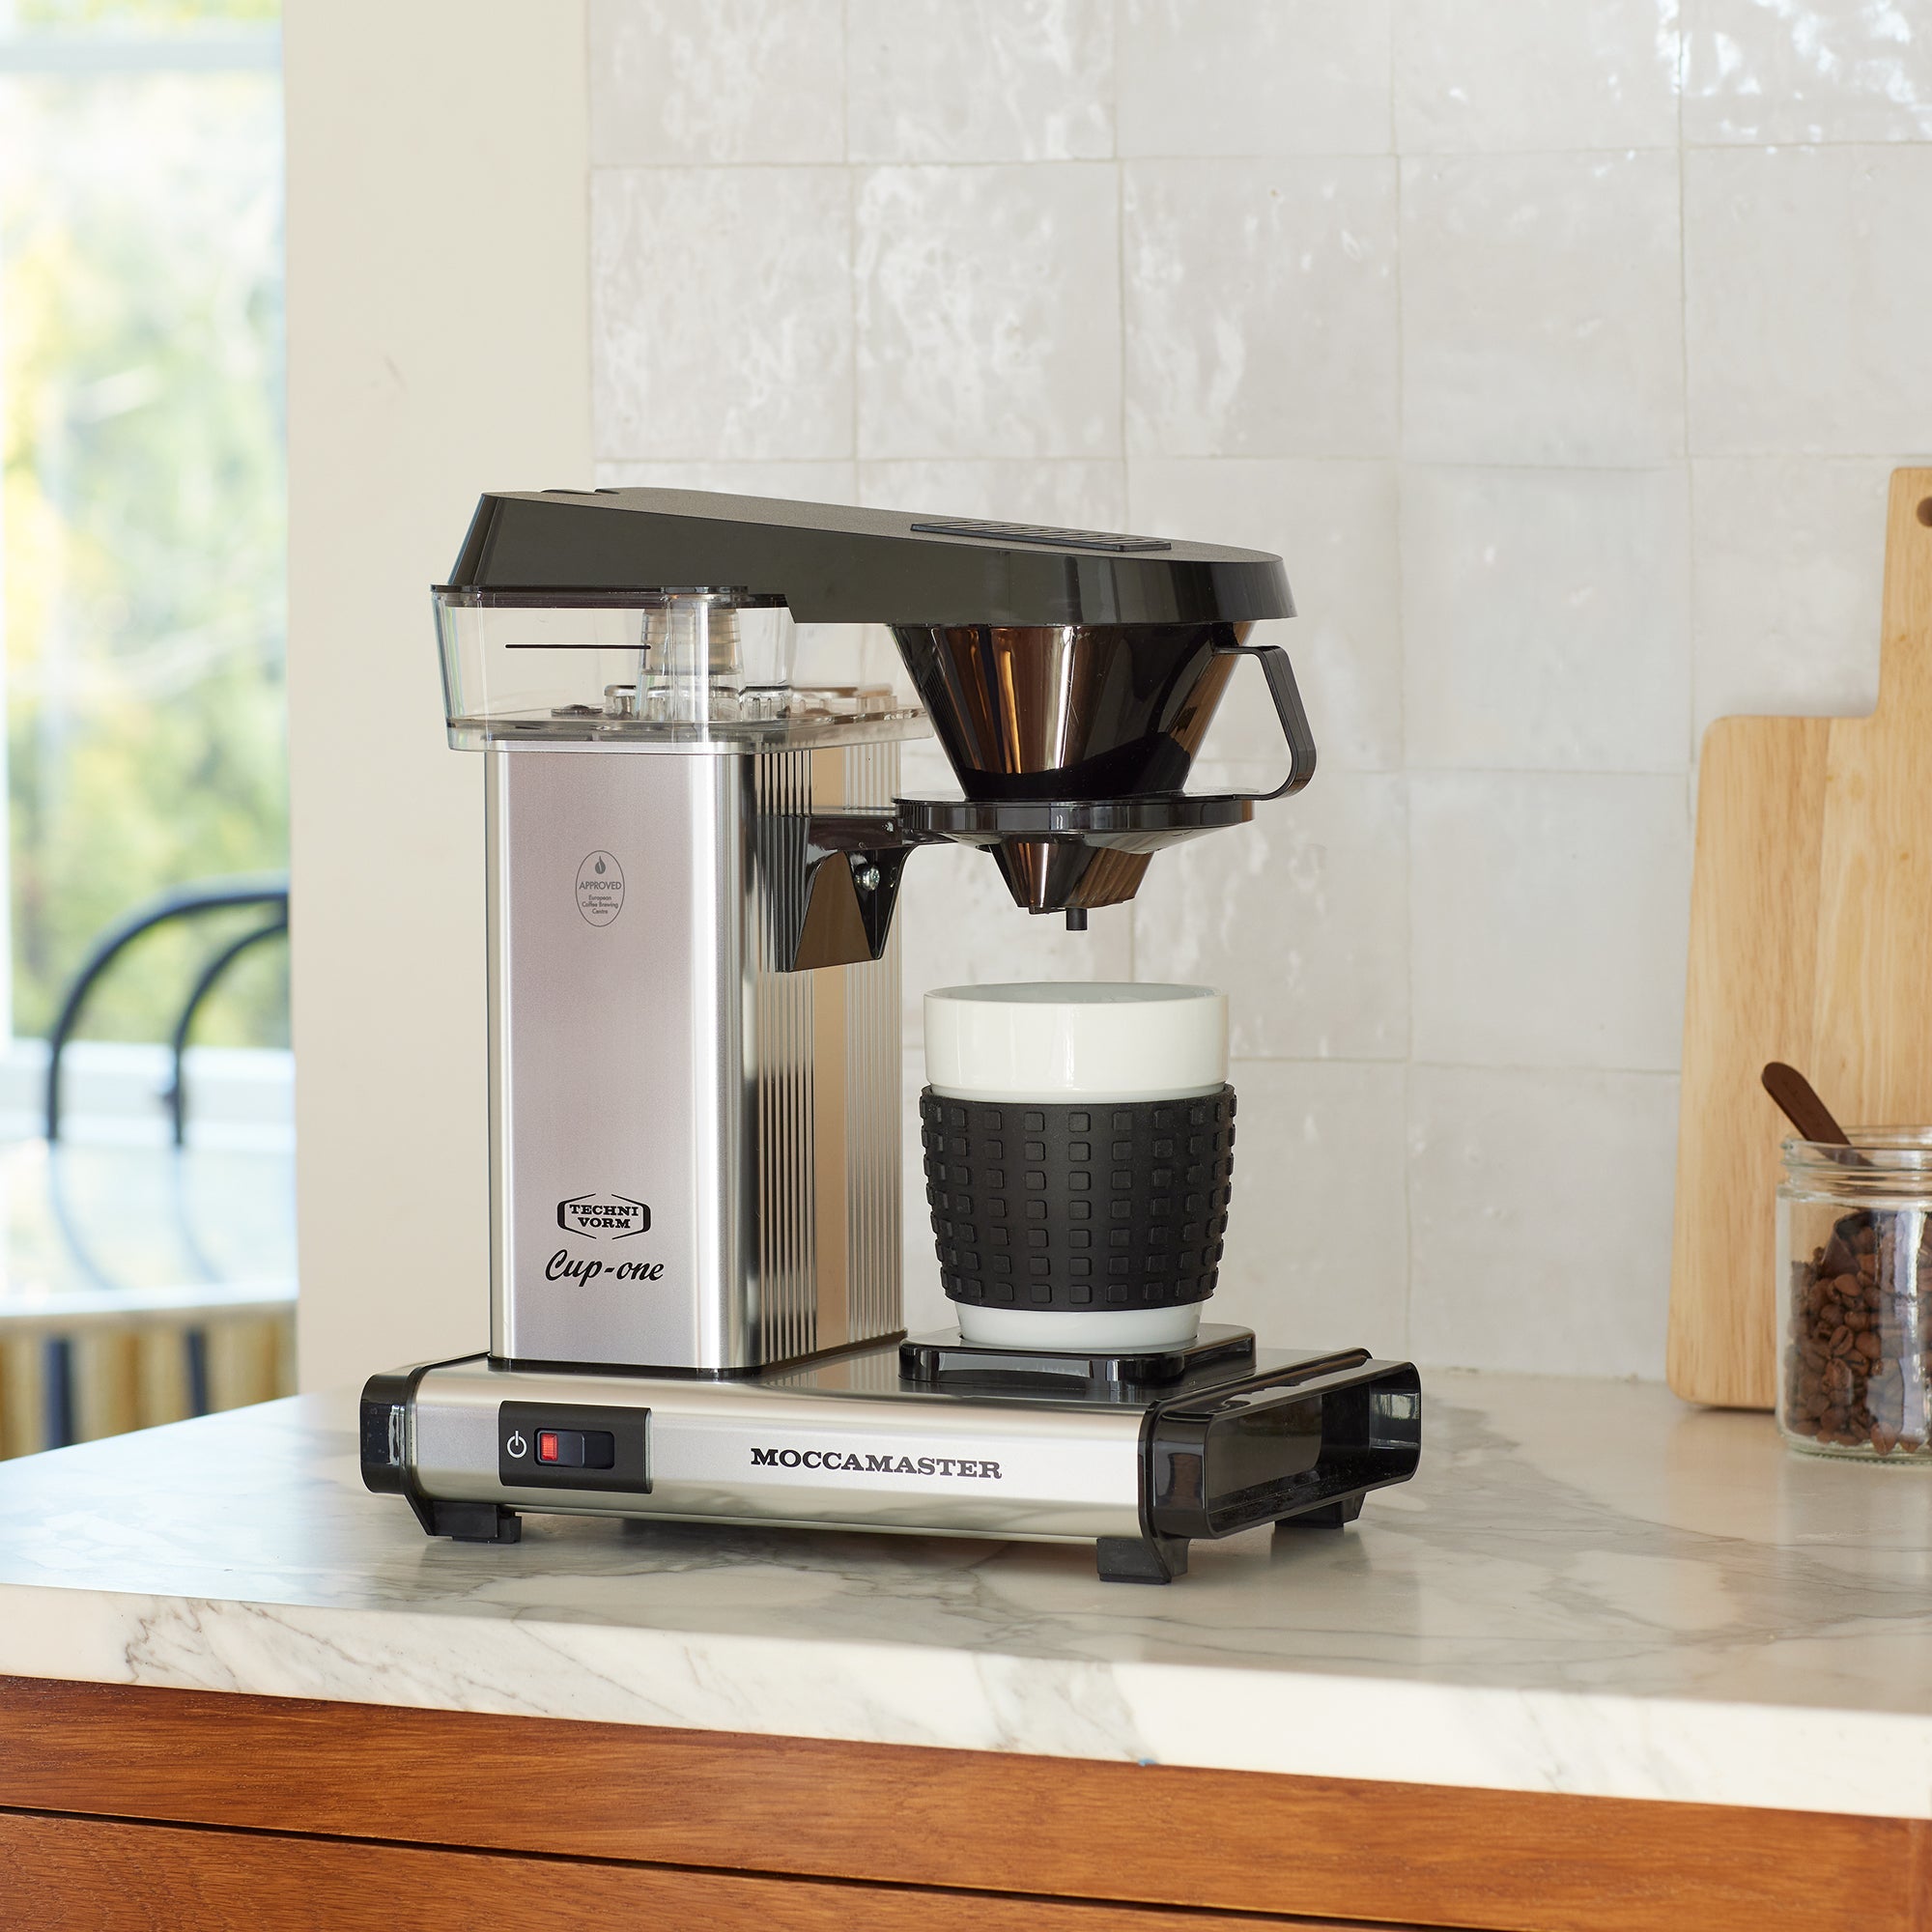 Home: Hamilton Beach Single-Cup coffee maker (refurb) $26 (Orig